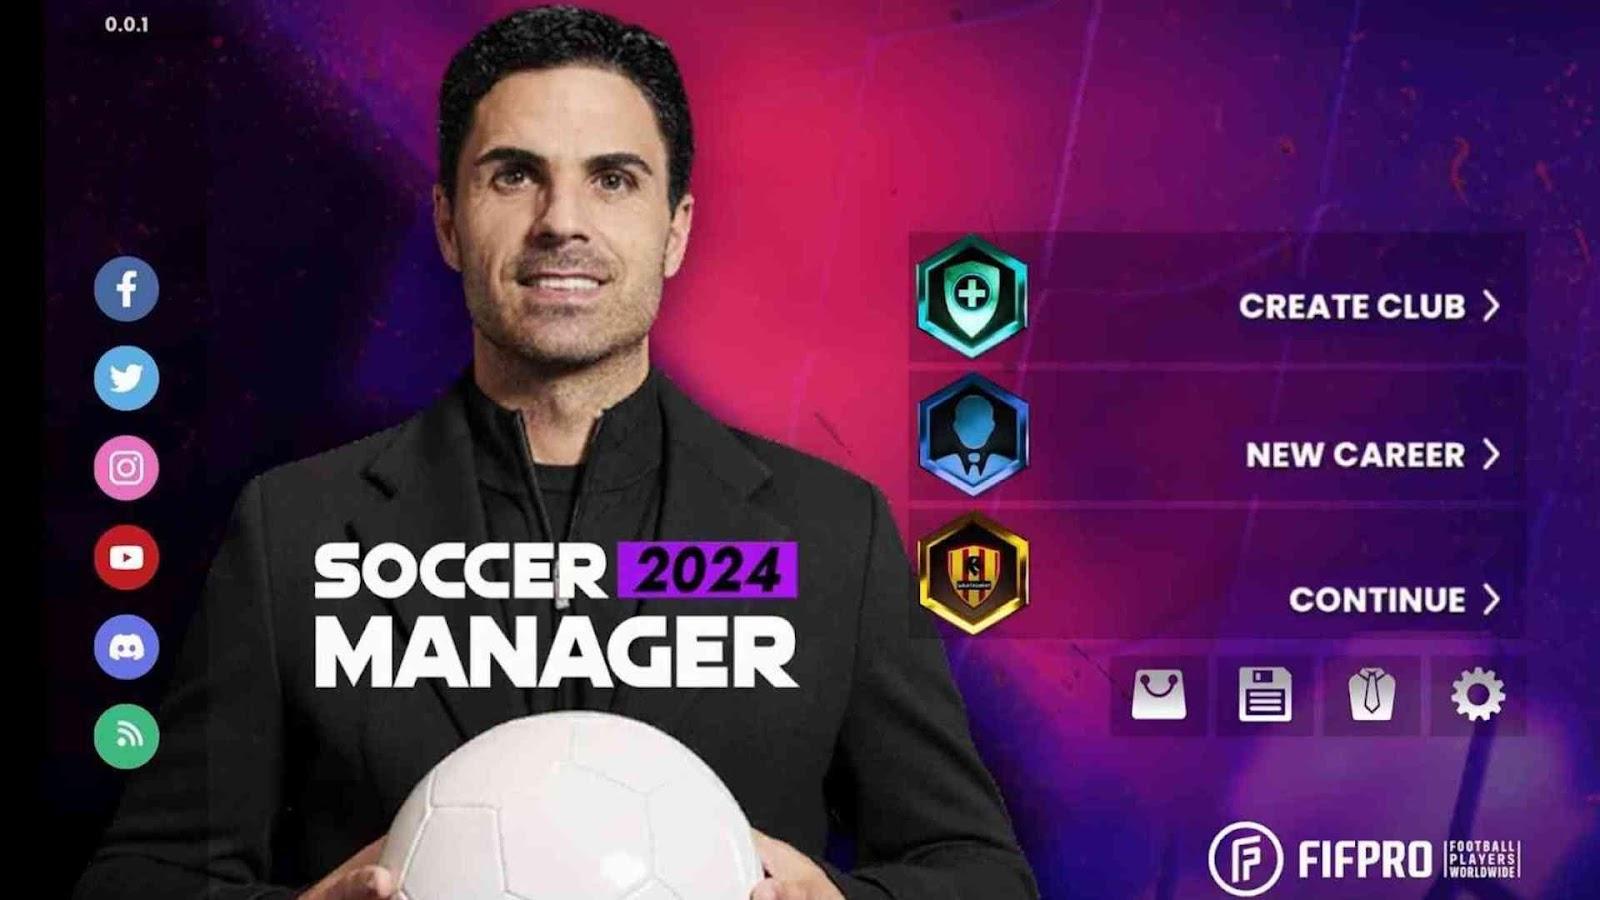 Soccer Manager 2024 - Football